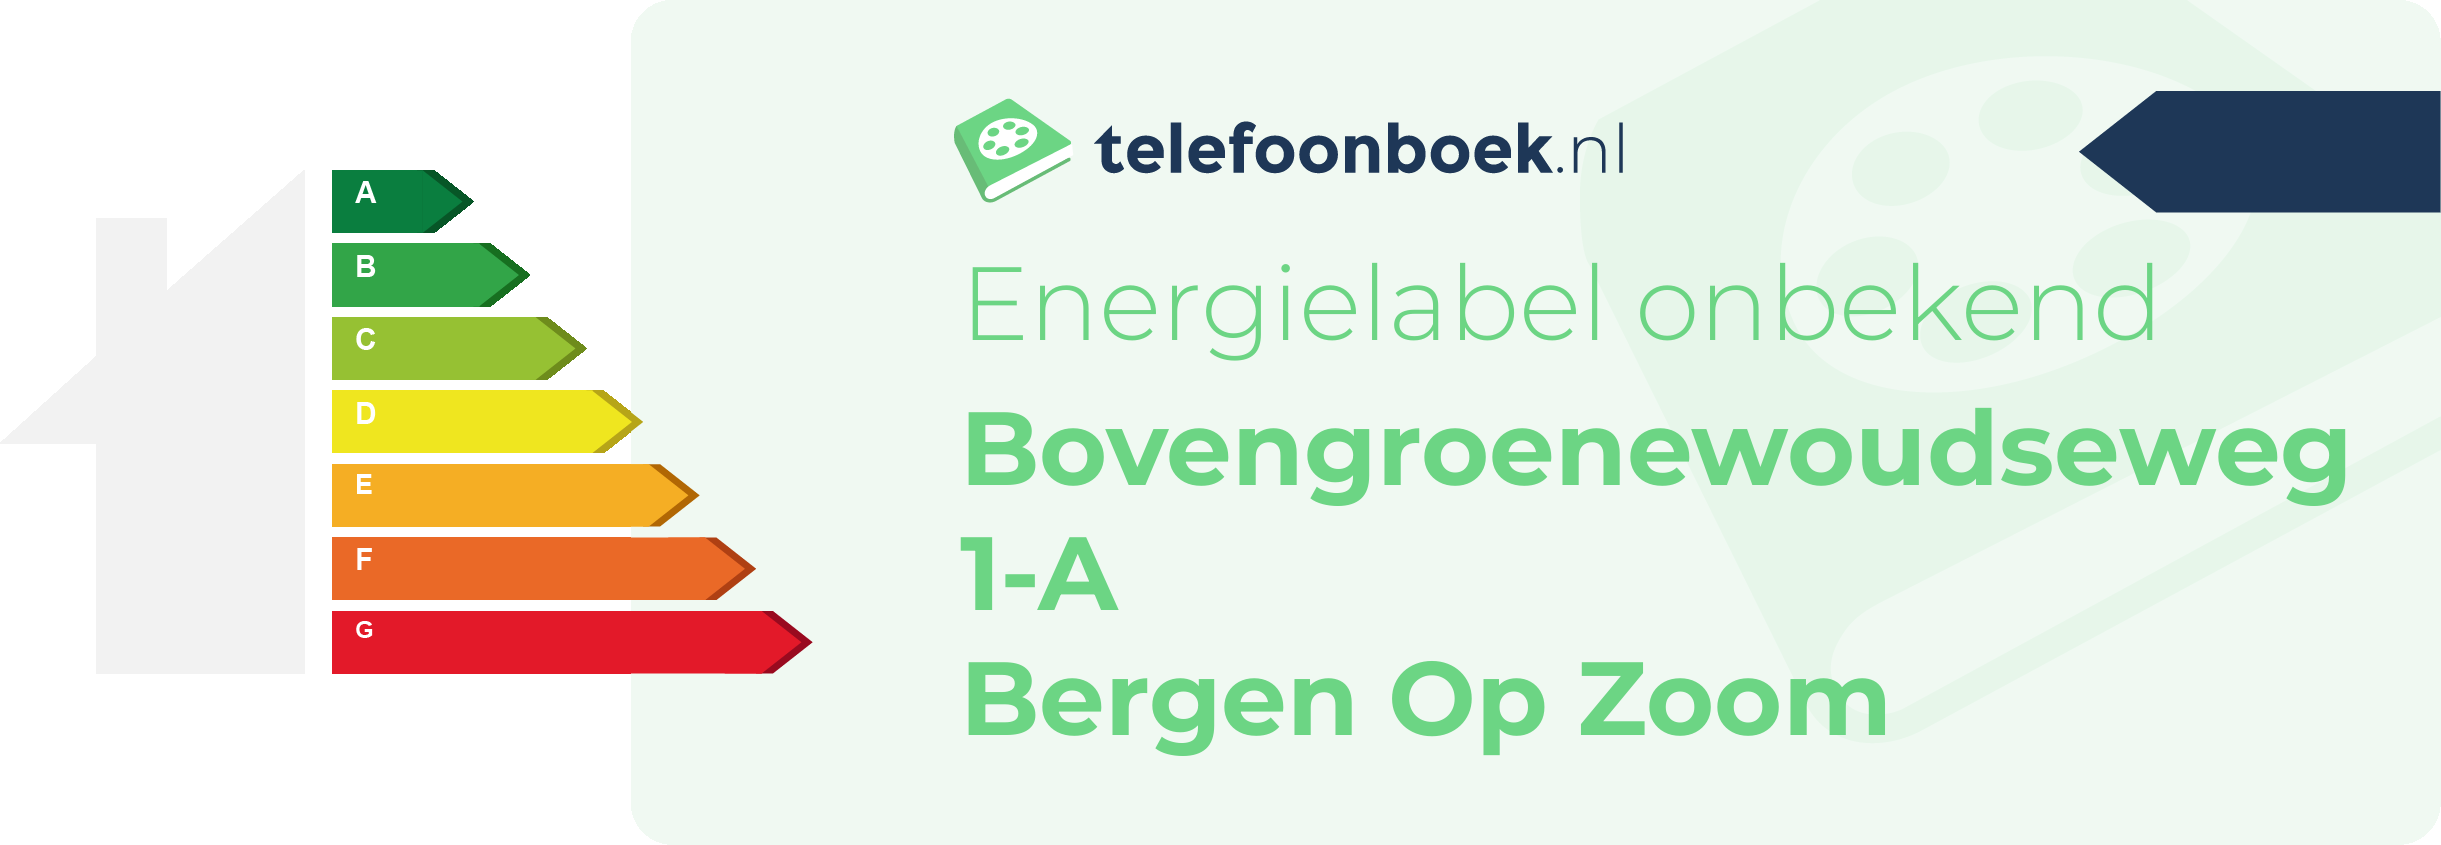 Energielabel Bovengroenewoudseweg 1-A Bergen Op Zoom